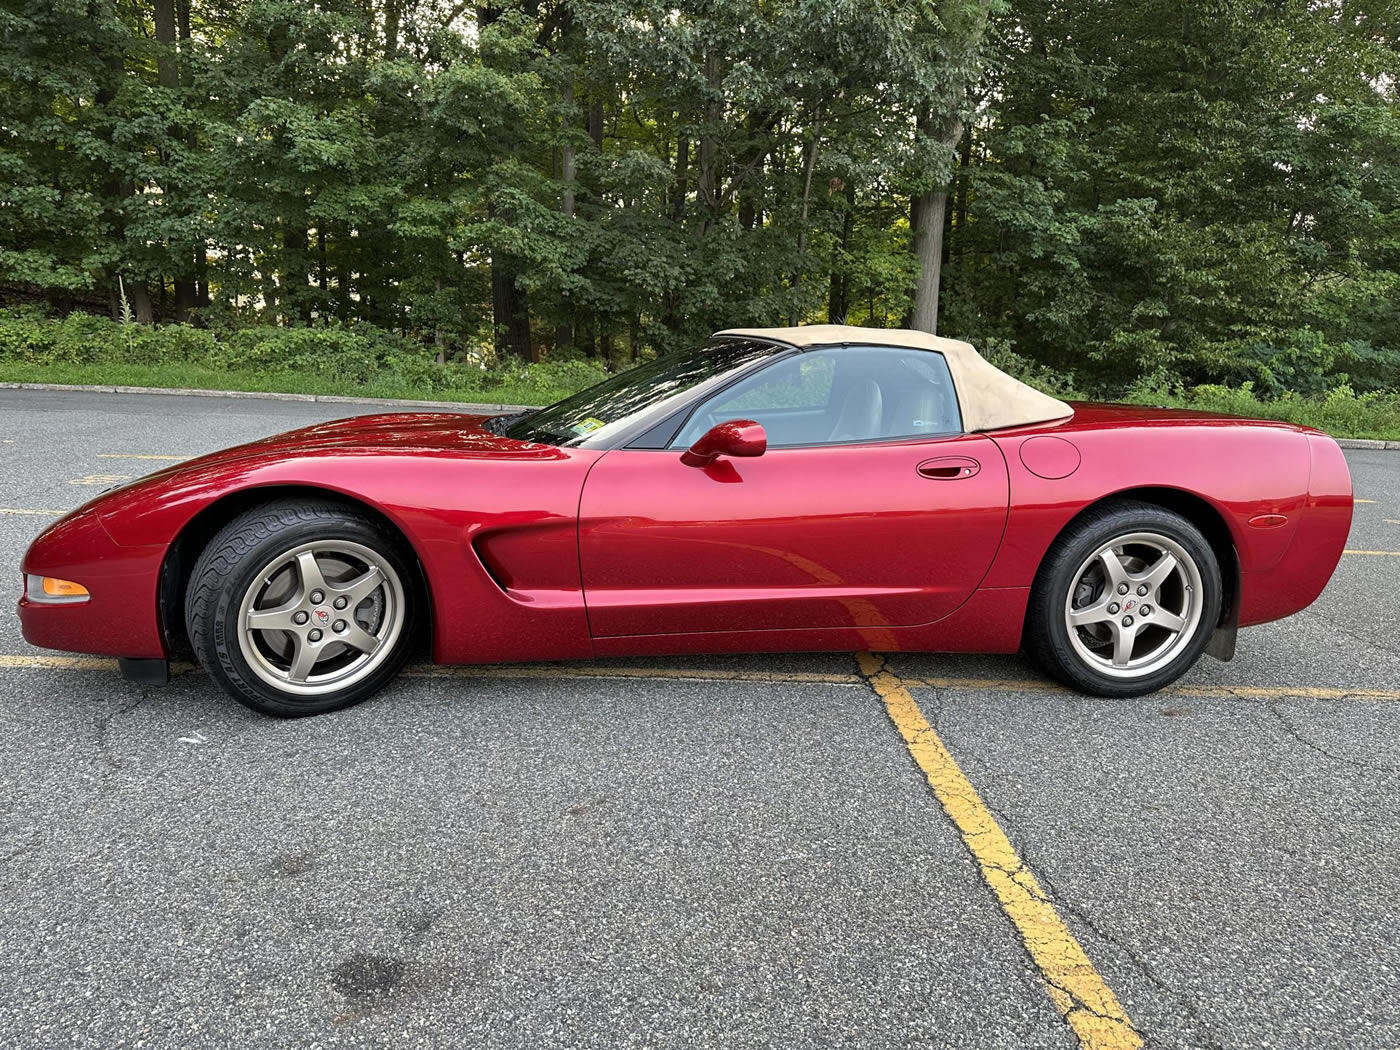 2000 Corvette Convertible in Magnetic Red Metallic